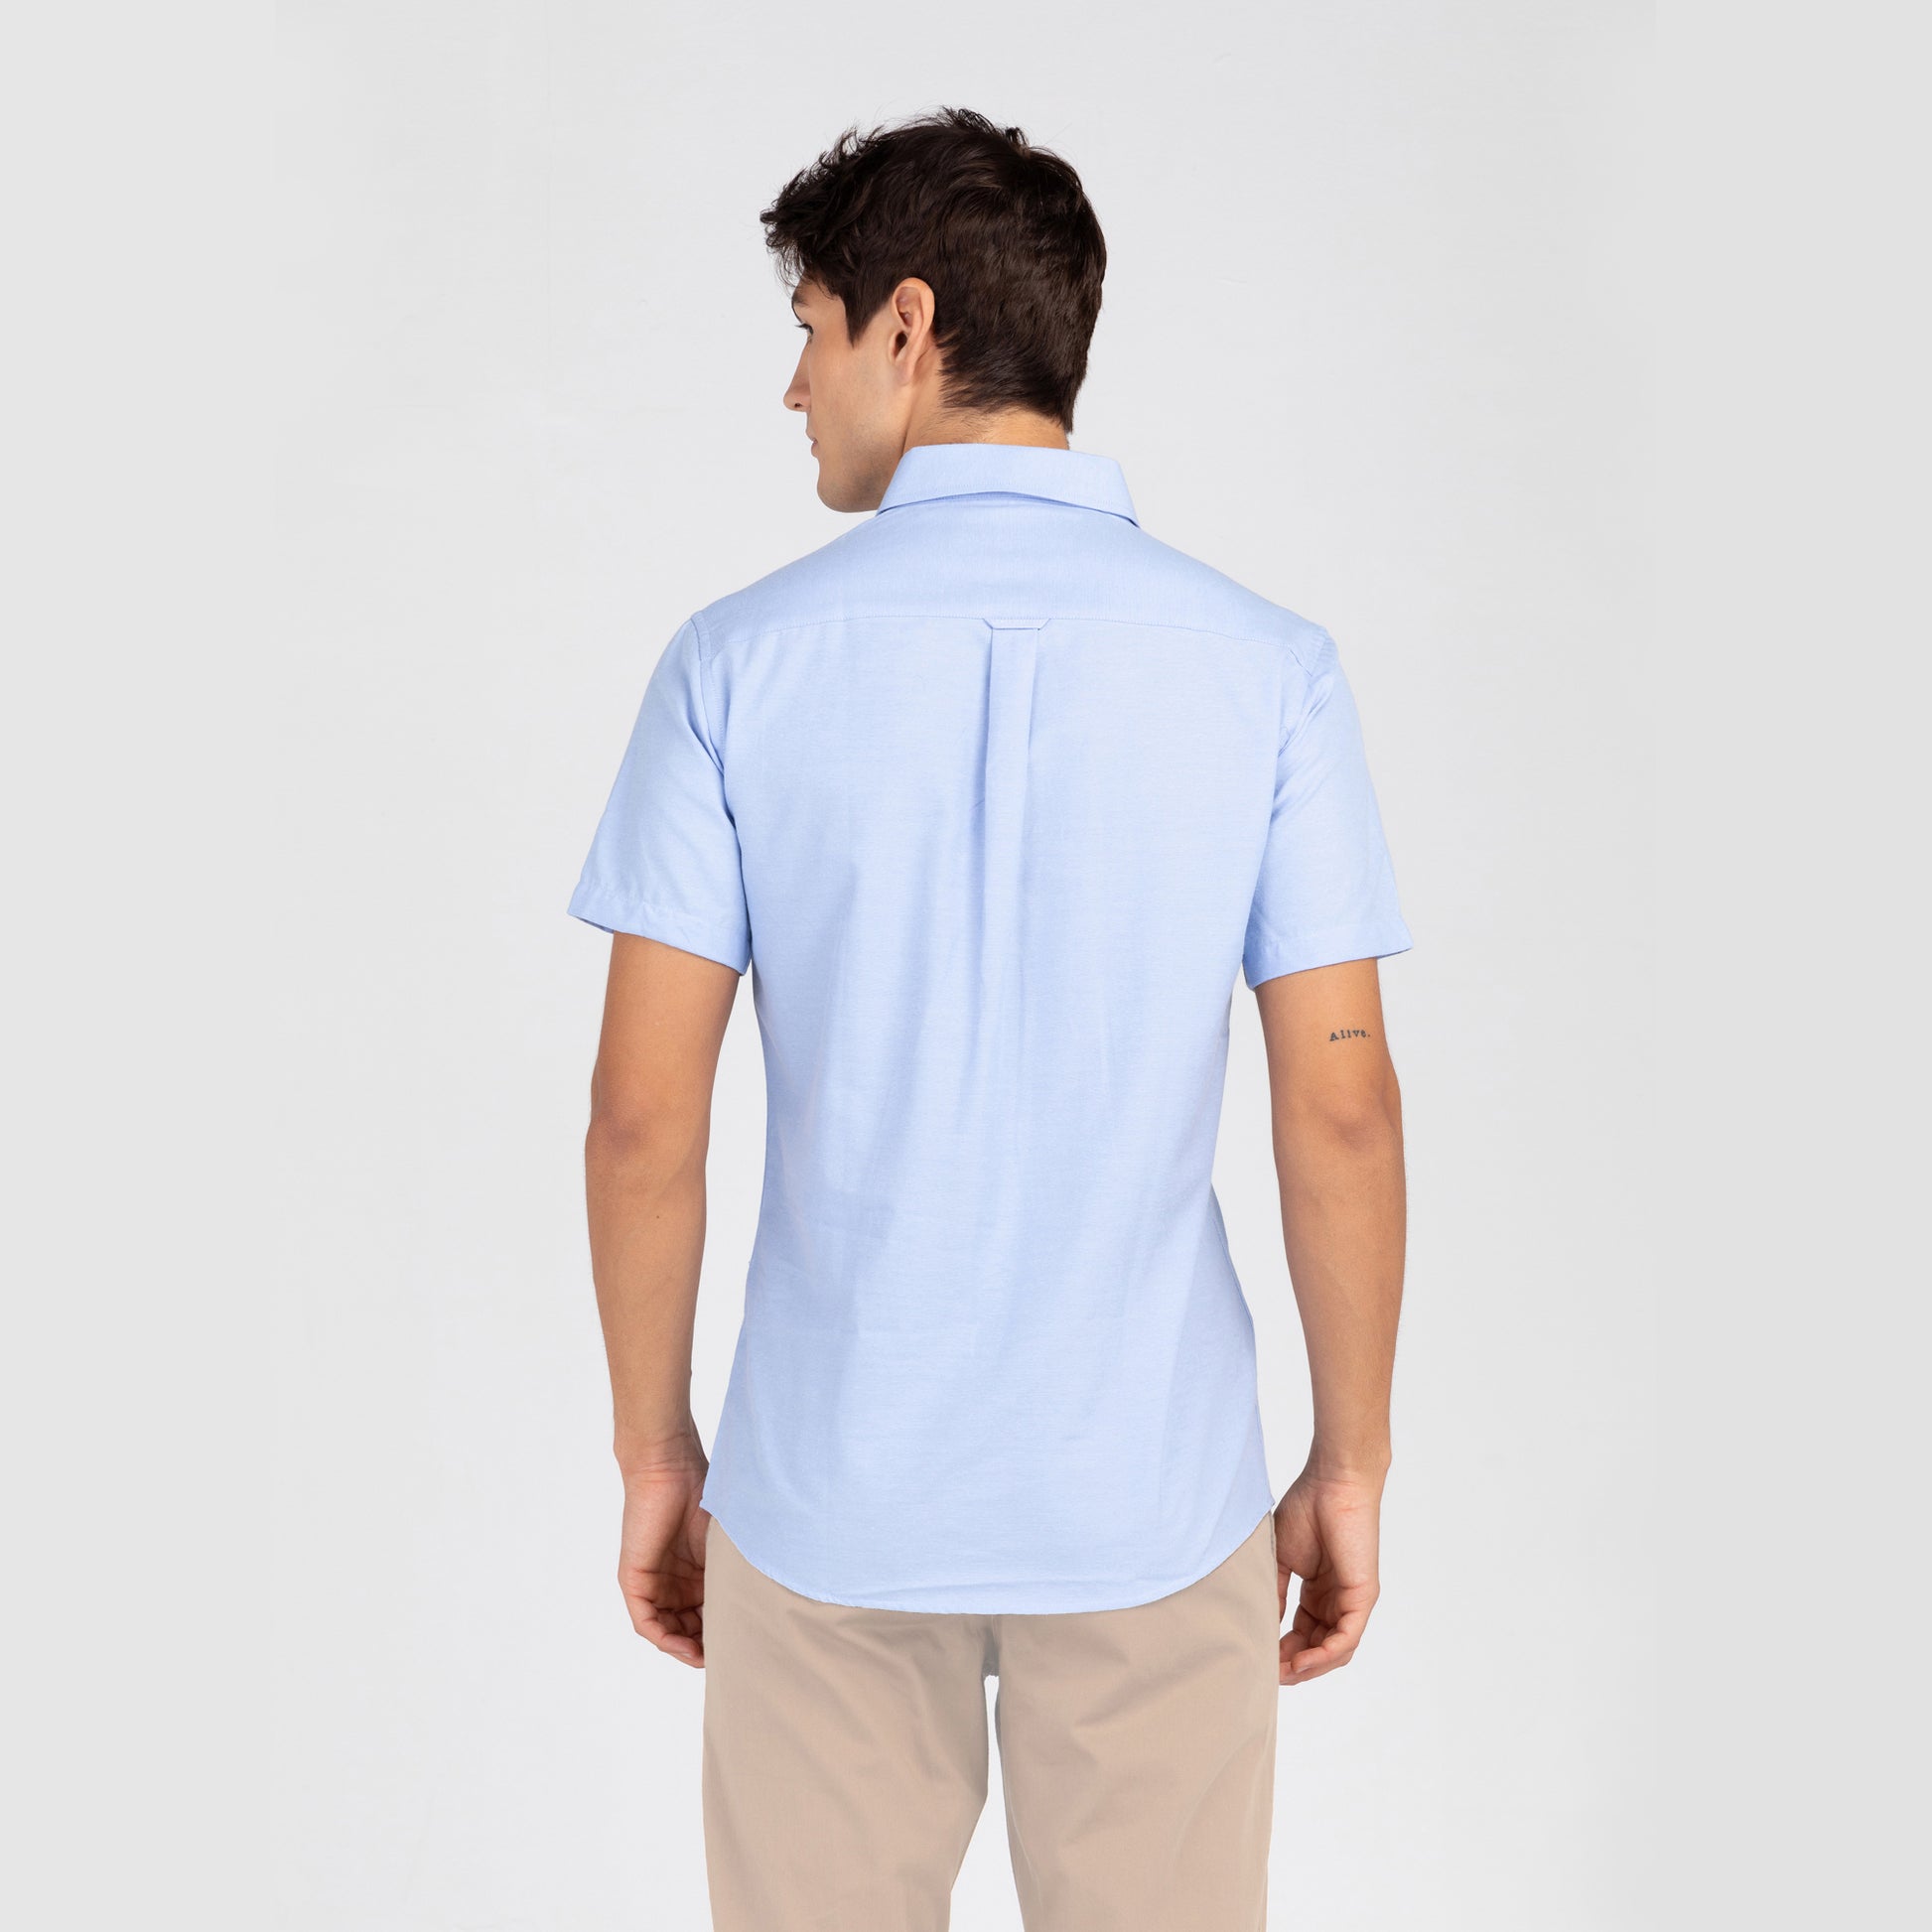 Mens REGULAR FIT Oxford Series Button Down Short Sleeve LIGHT BLUE Shirt - IDENTITY Apparel Shop